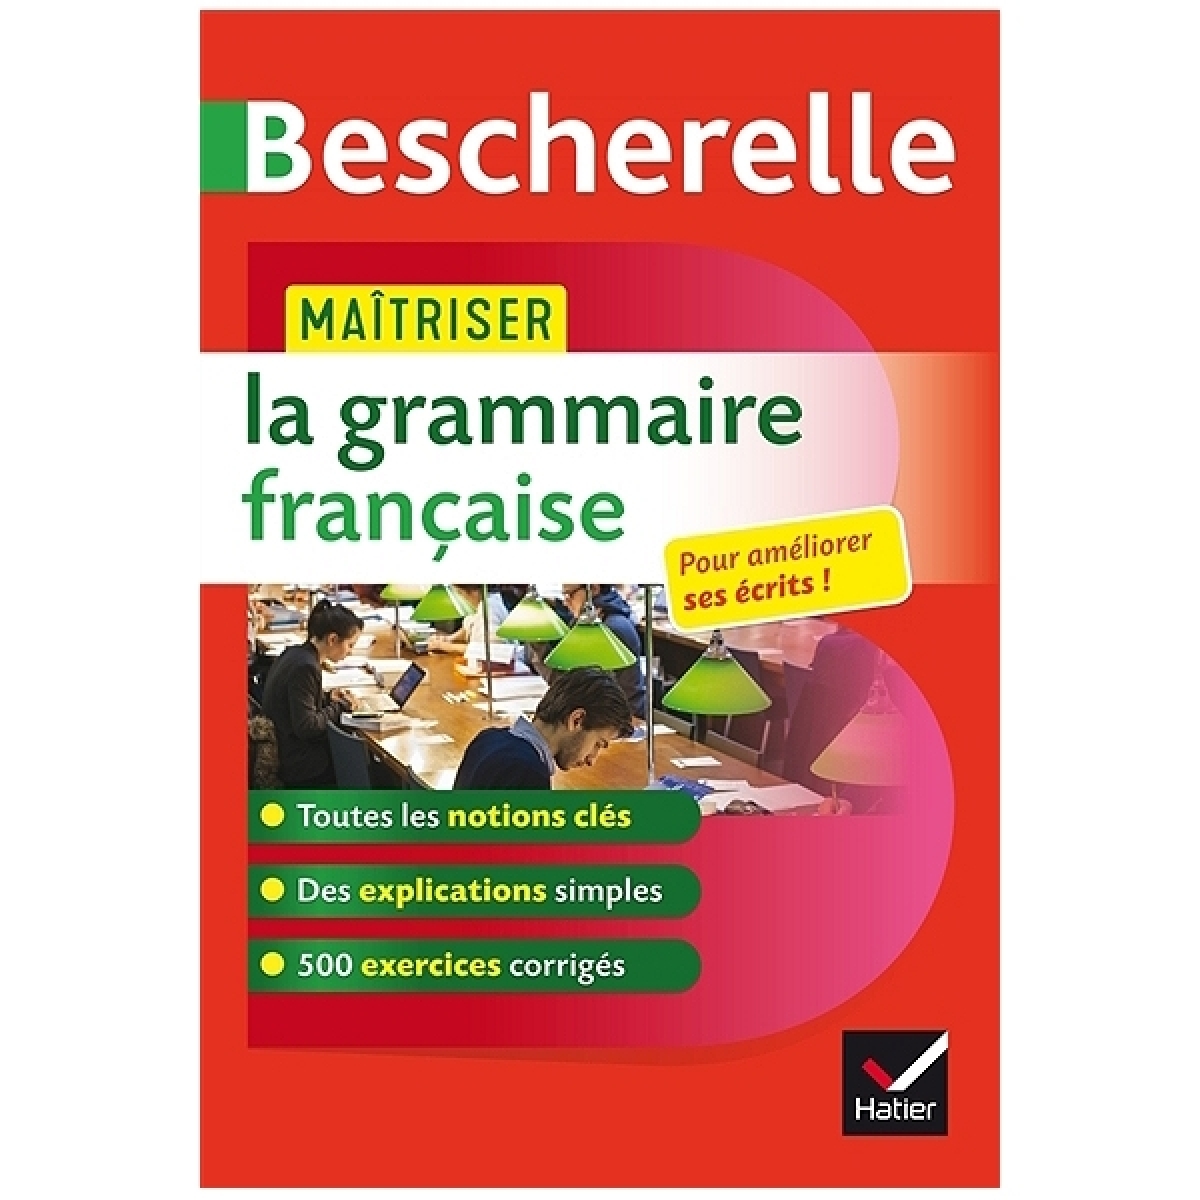 Laurent N. Bescherelle, Maitriser la grammaire francaise 